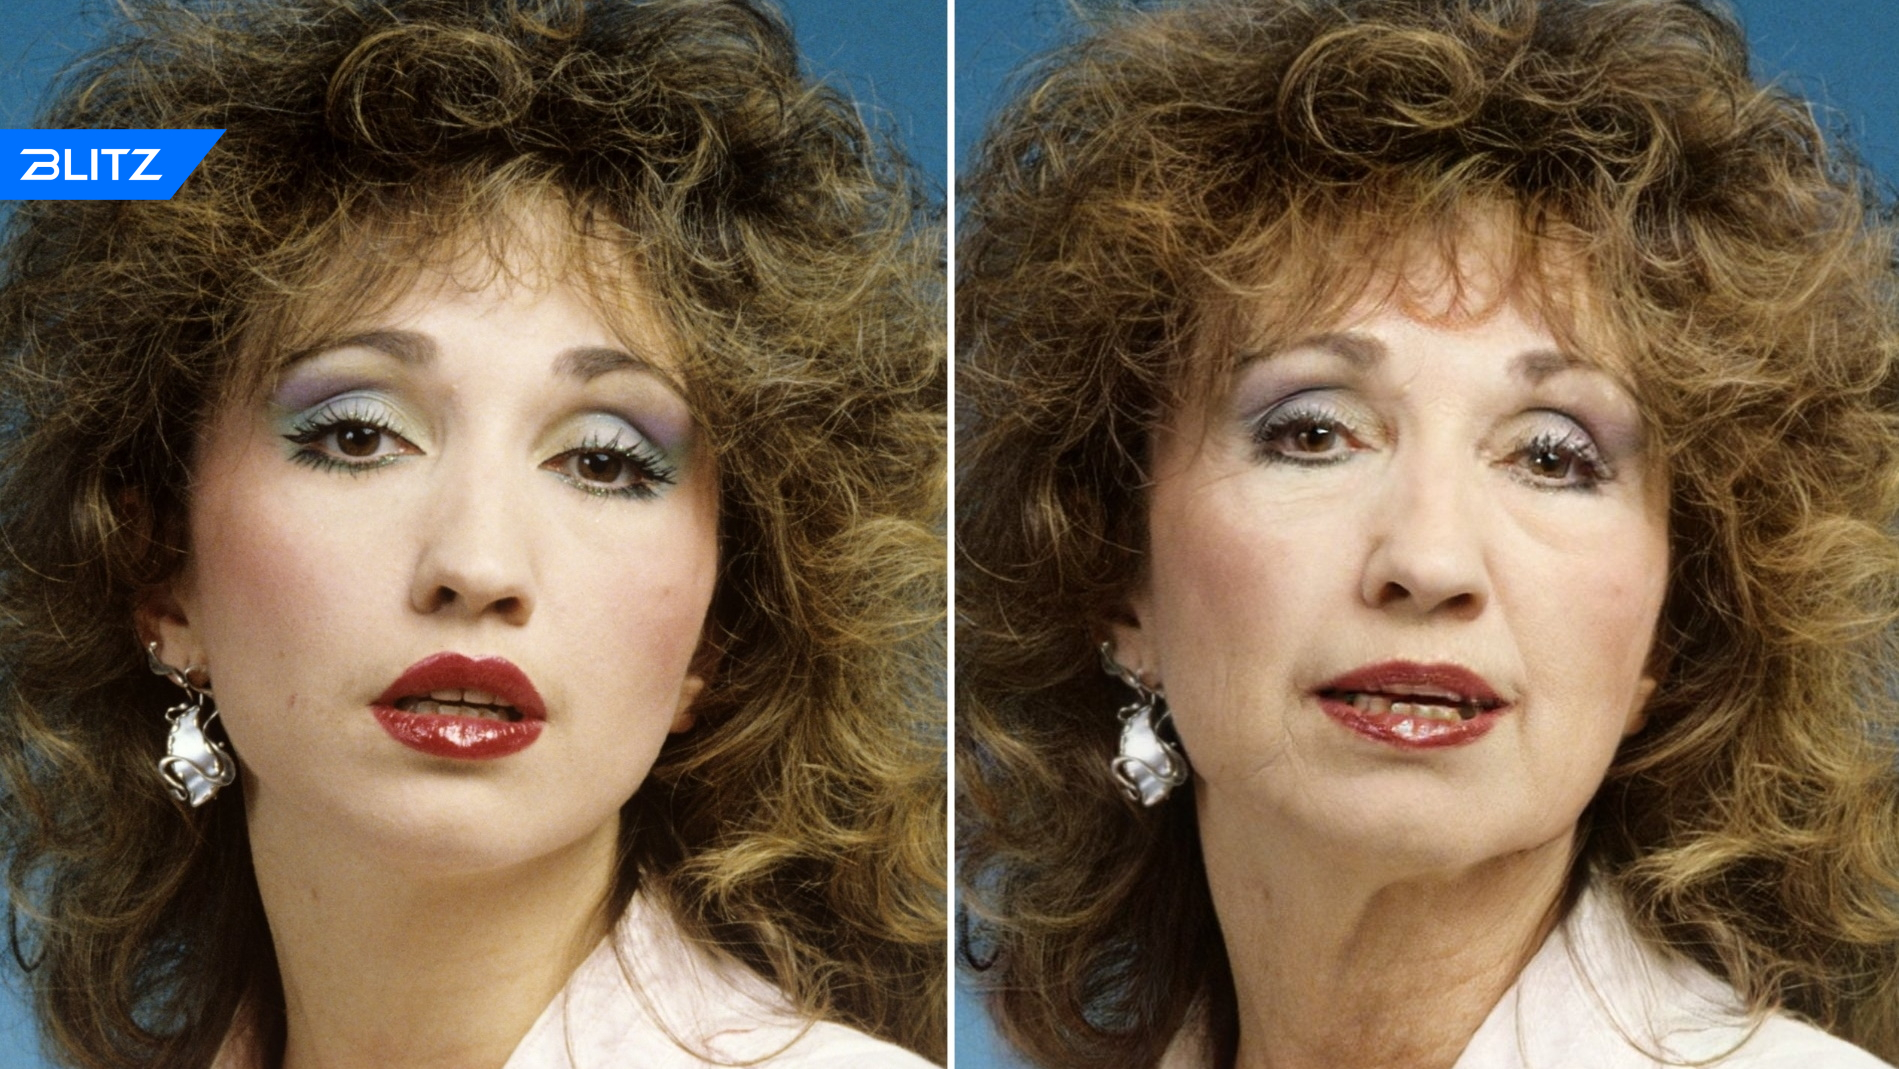 Аллегрова пластика лица до и после фото